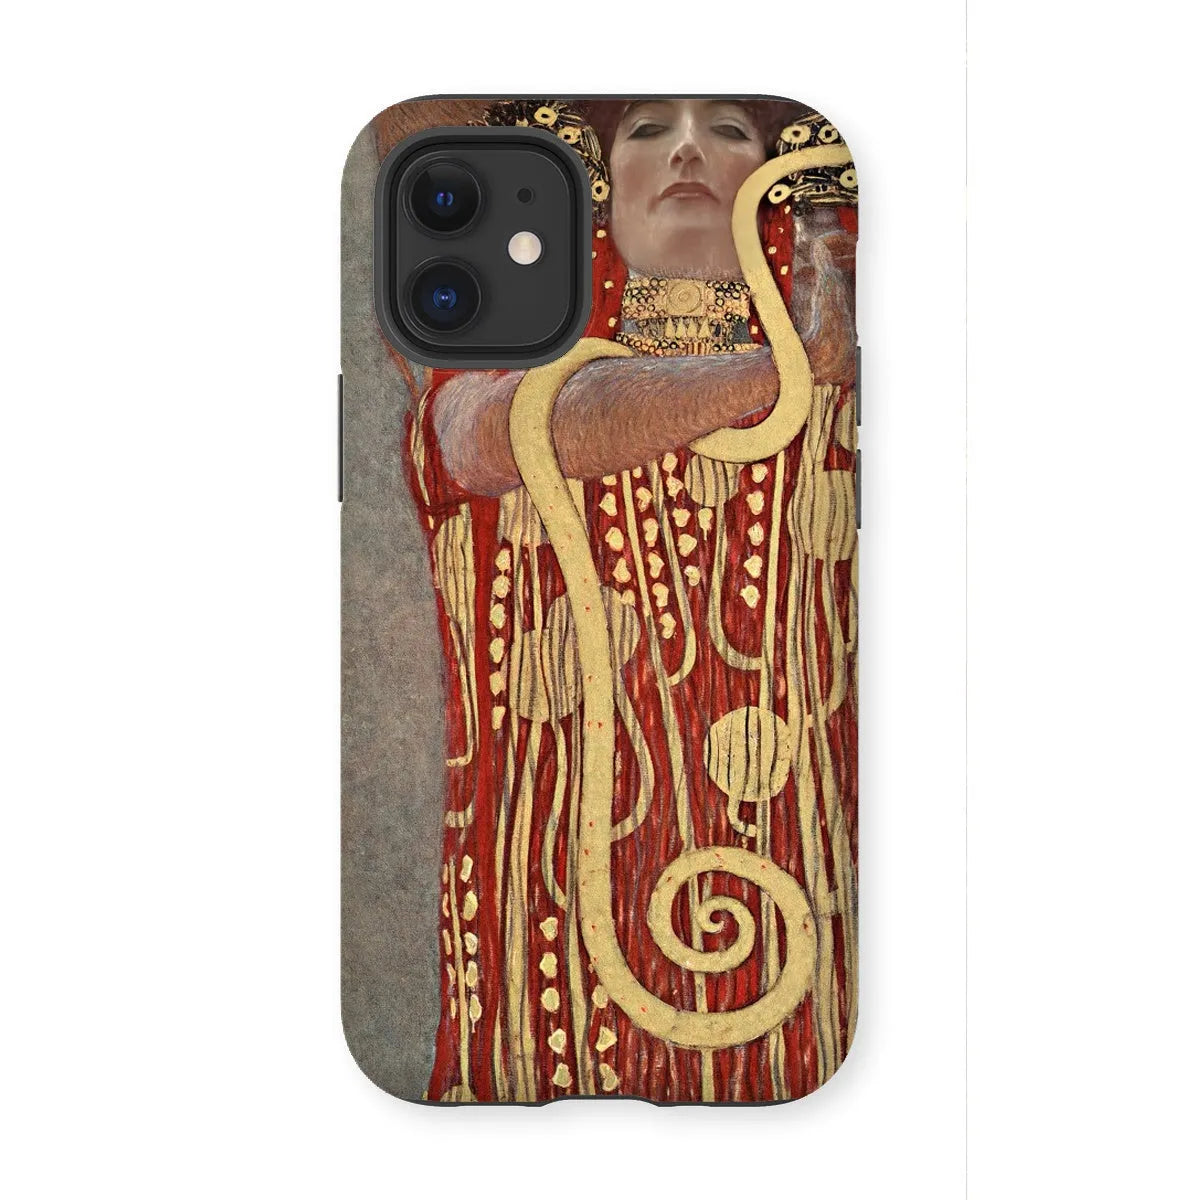 Hygieia - Vienna Succession Phone Case - Gustav Klimt - Iphone 12 Mini / Matte - Mobile Phone Cases - Aesthetic Art